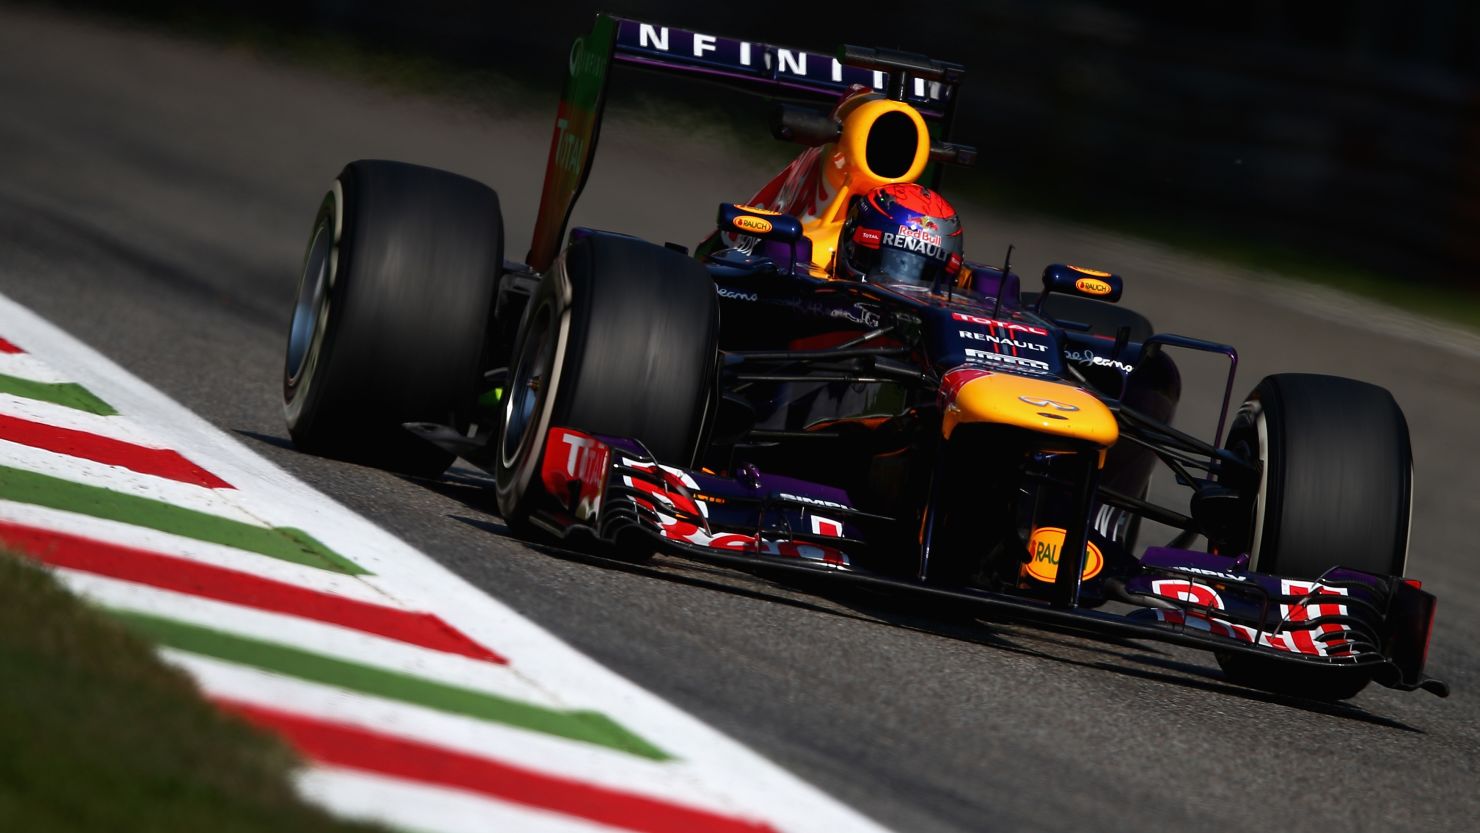 Germany's Sebastian Vettel has won the Italian Grand Prix twice during his career.